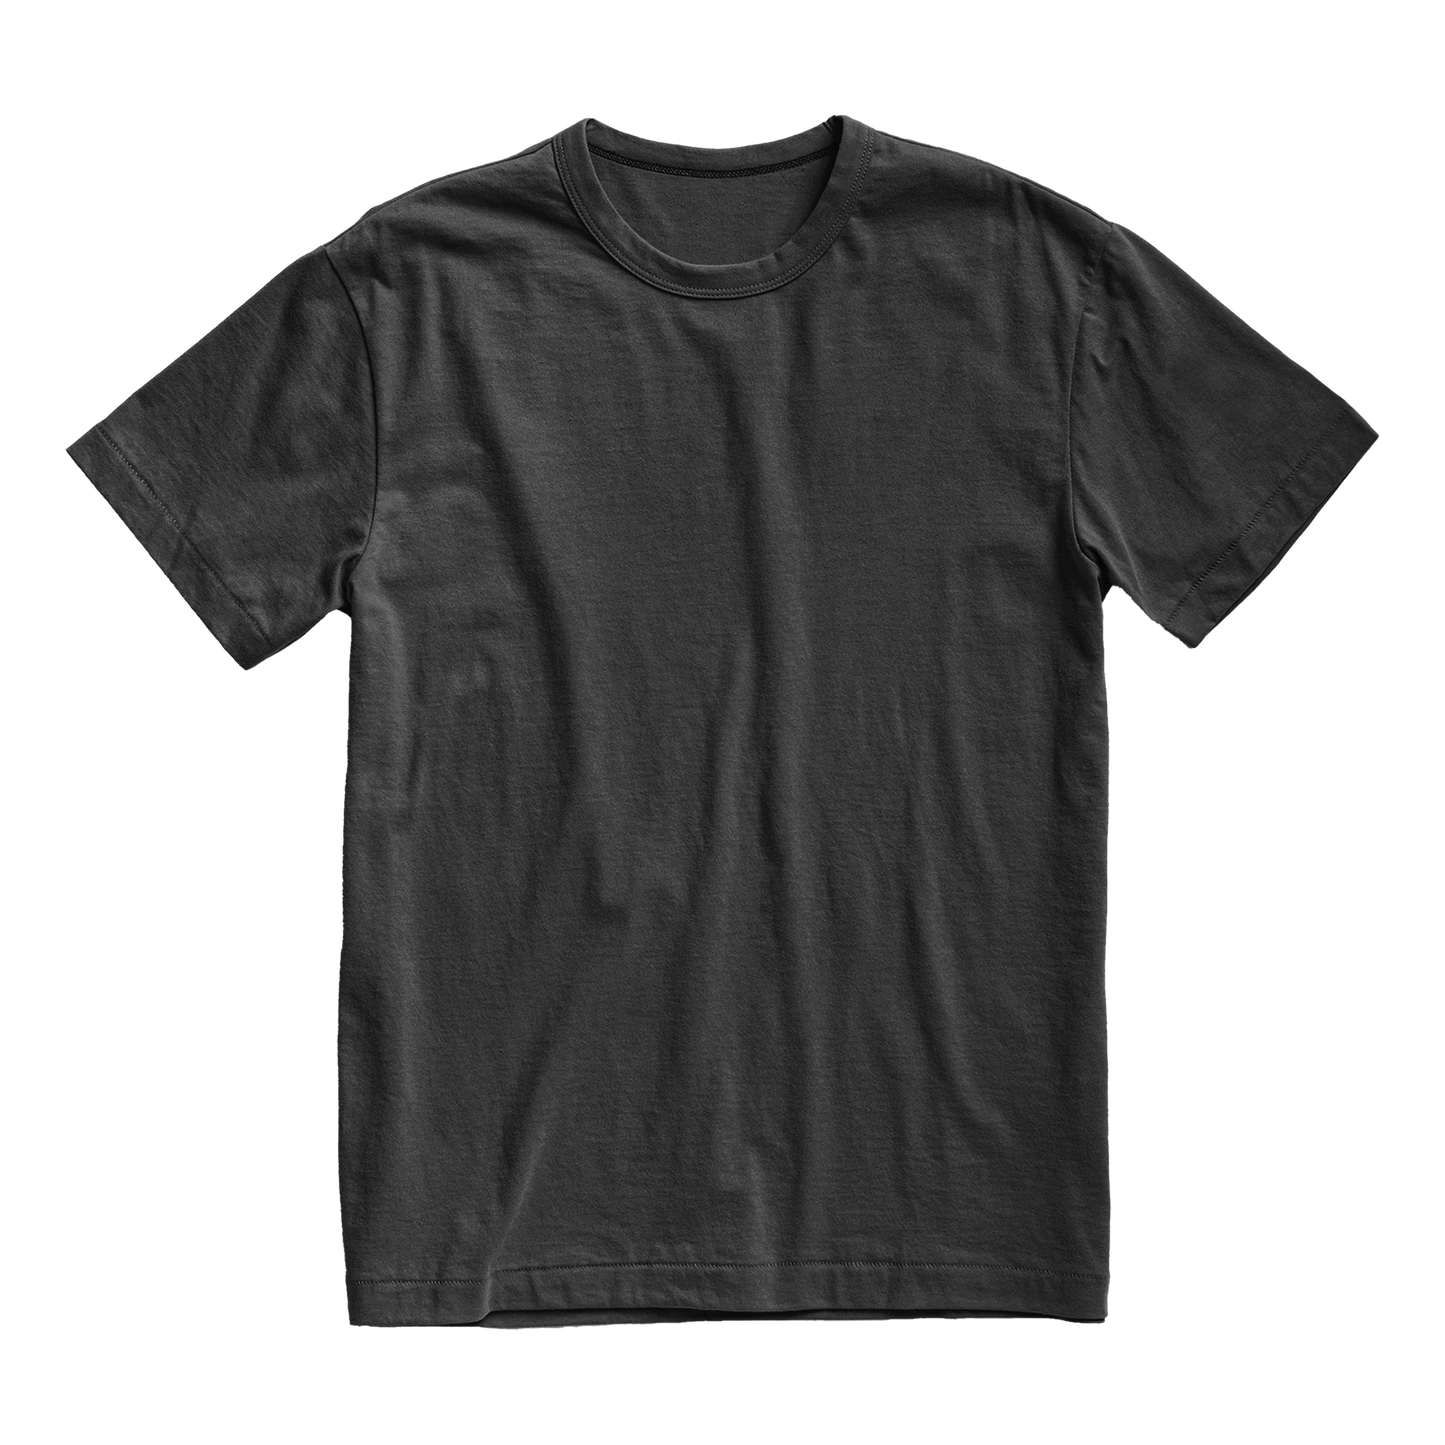 Minimalist Crewneck T-Shirt Mockup (Adobe Photoshop)